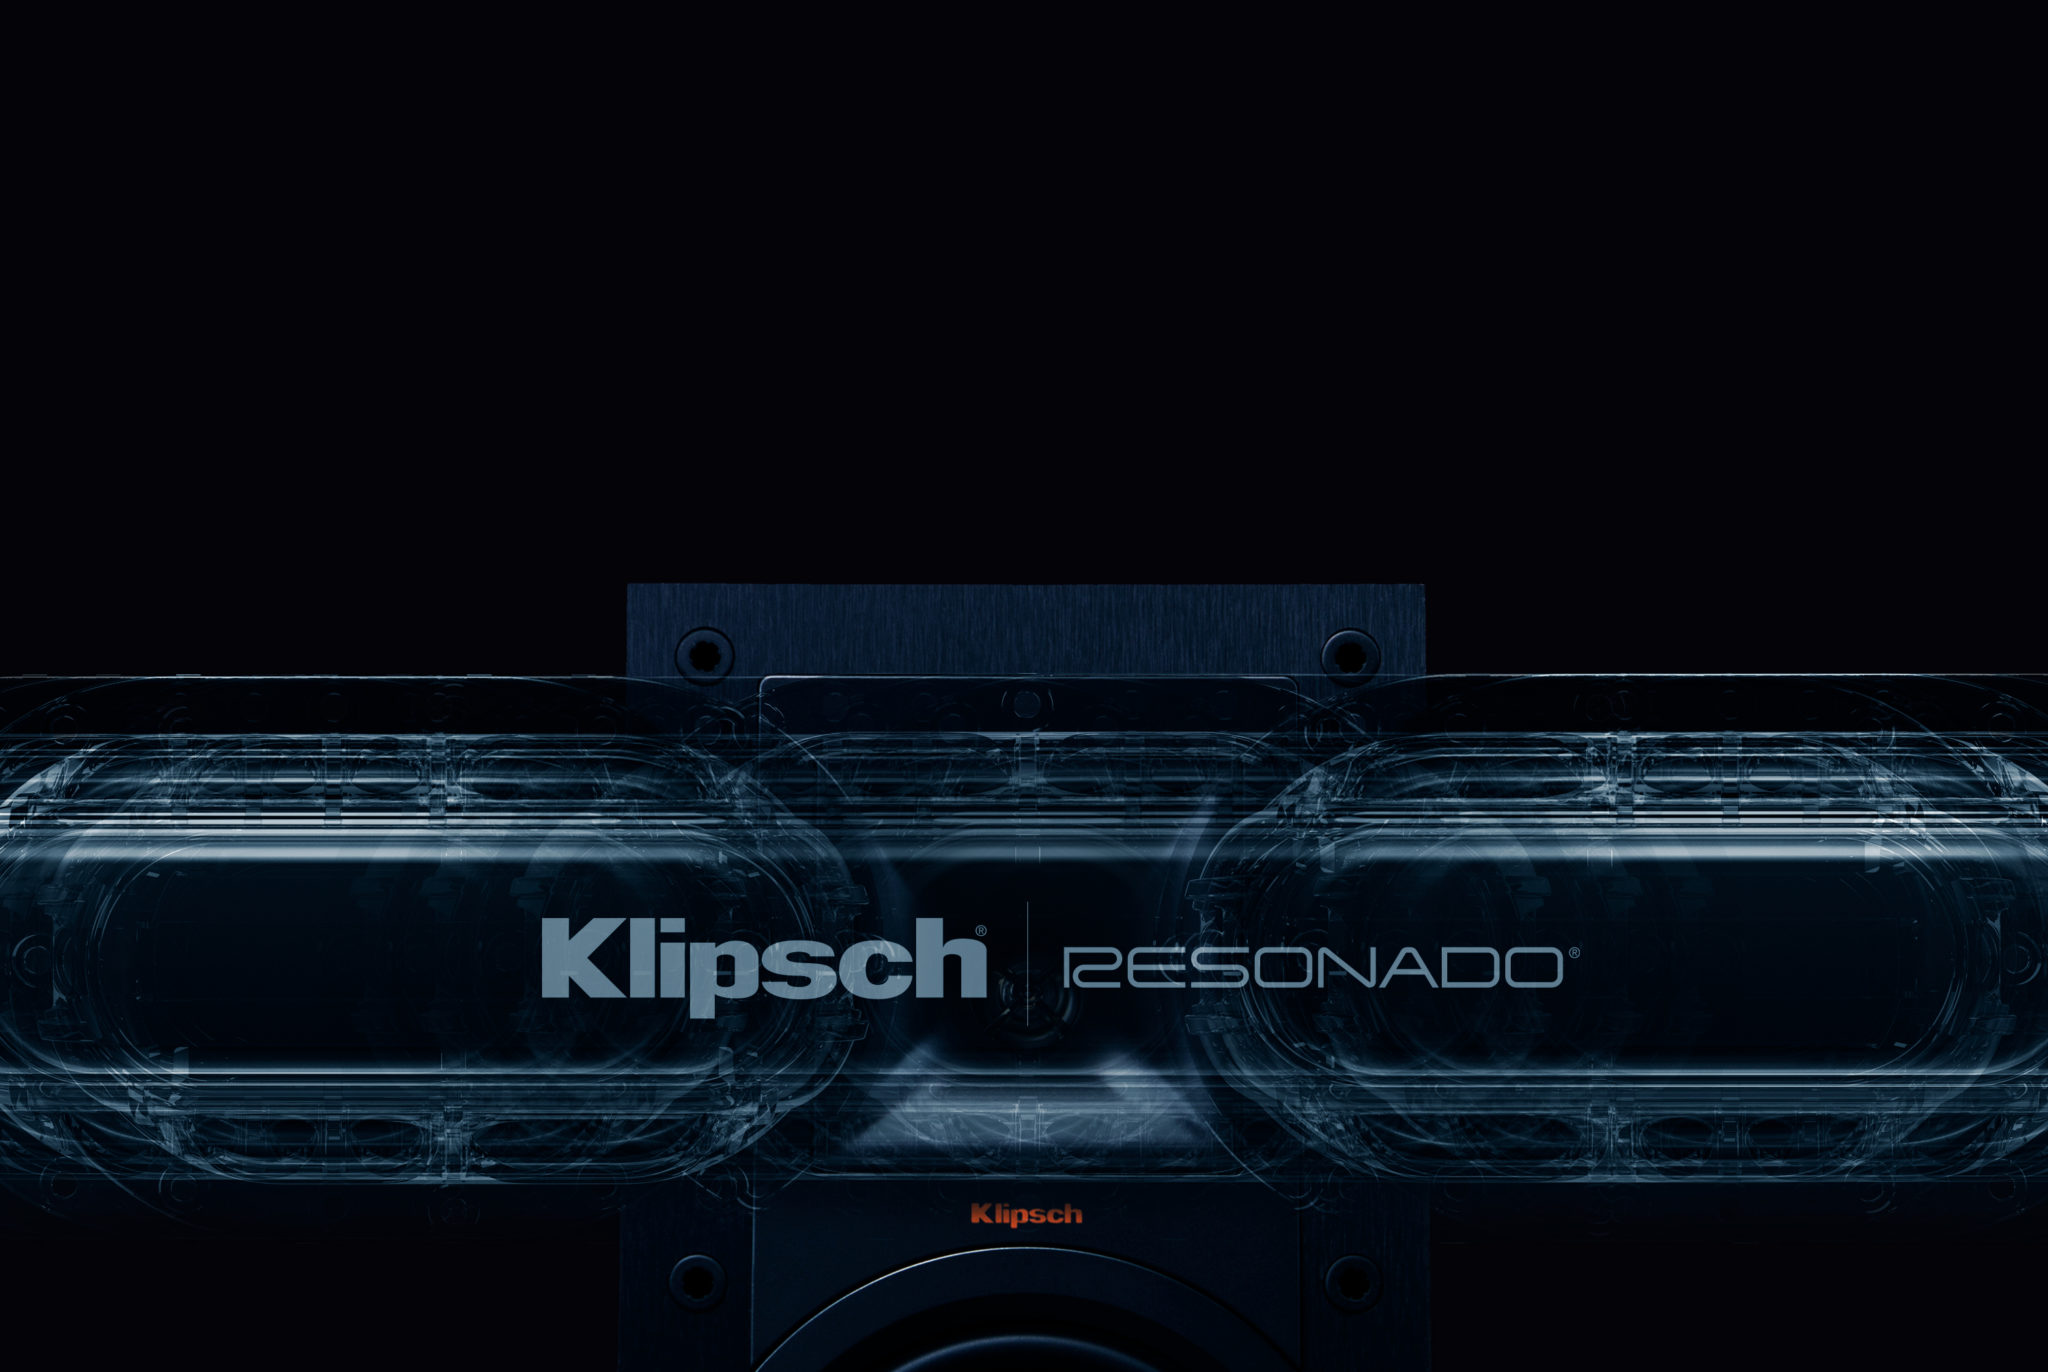 Klipsch Announces Strategic Partnership with Resonado Labs